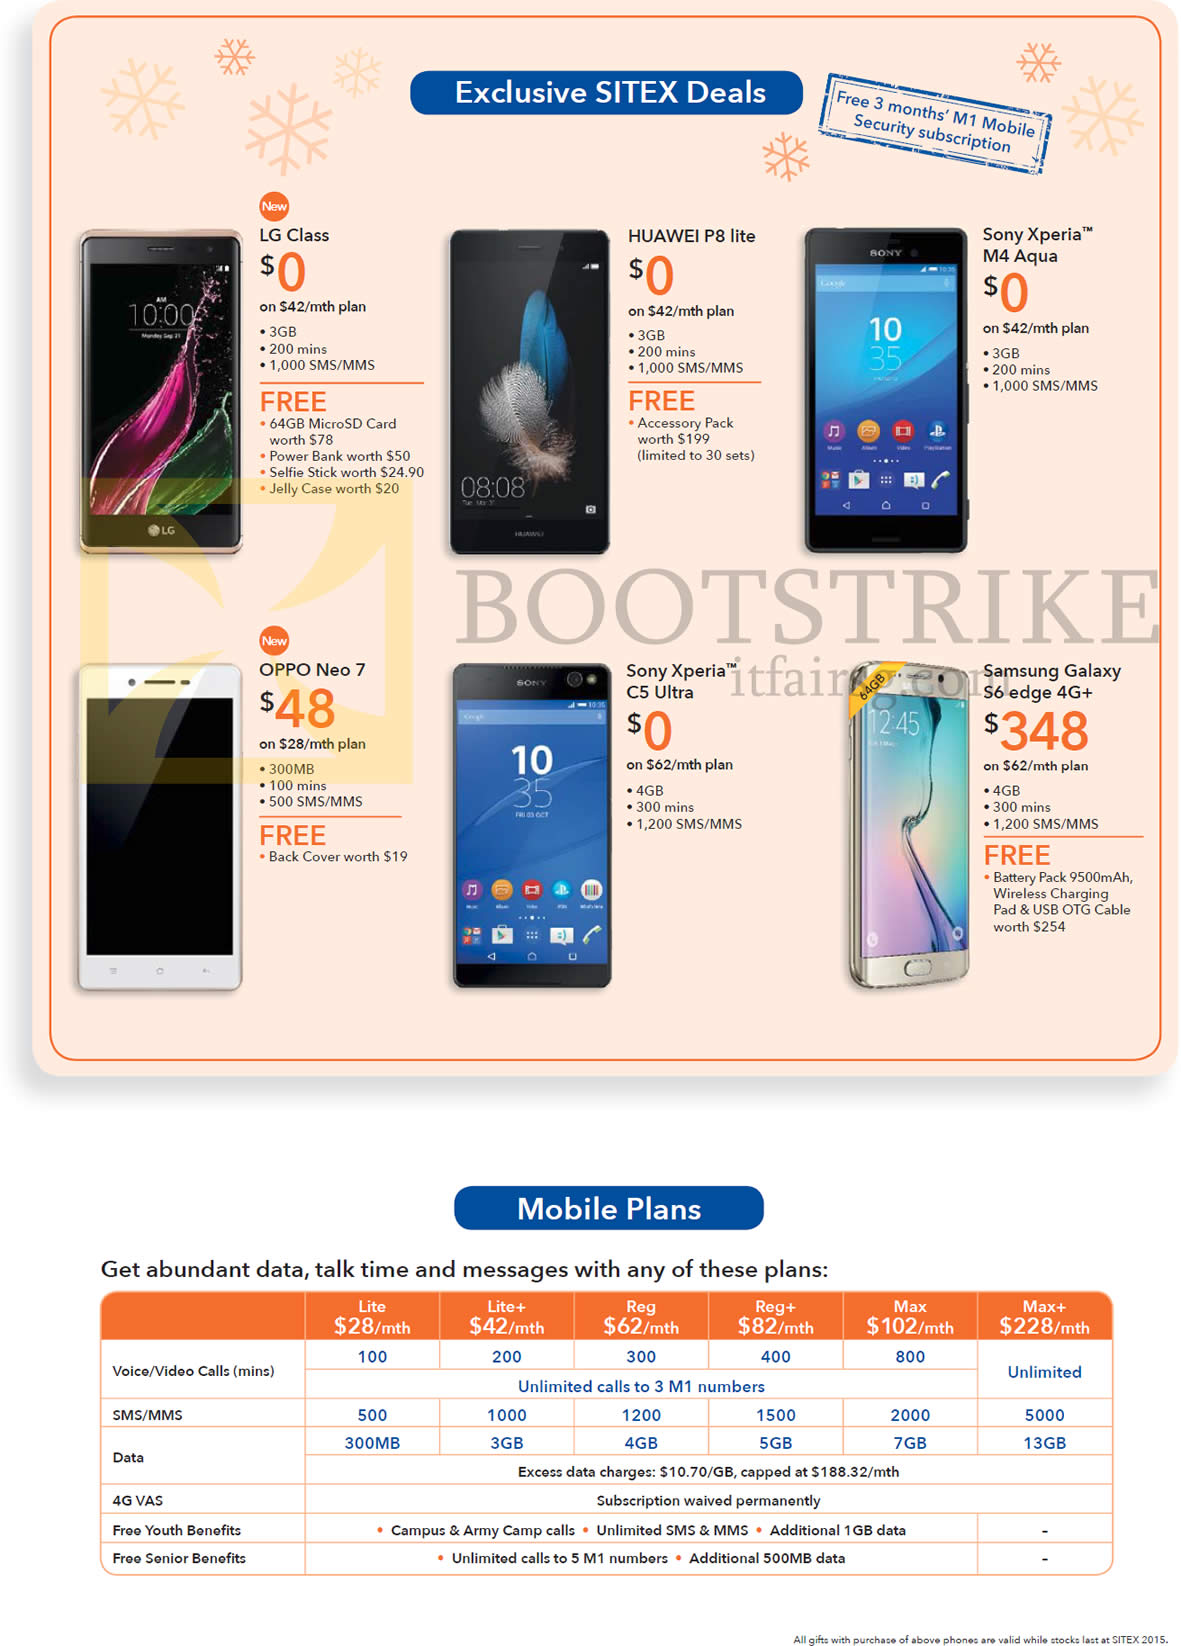 SITEX 2015 price list image brochure of M1 Mobile Smartphone LG Class, Huawei P8 Lite, Sony Xperia M4 Aqua C5 Ultra, Oppo Neo 7, Samsung Galaxy S6 Edge